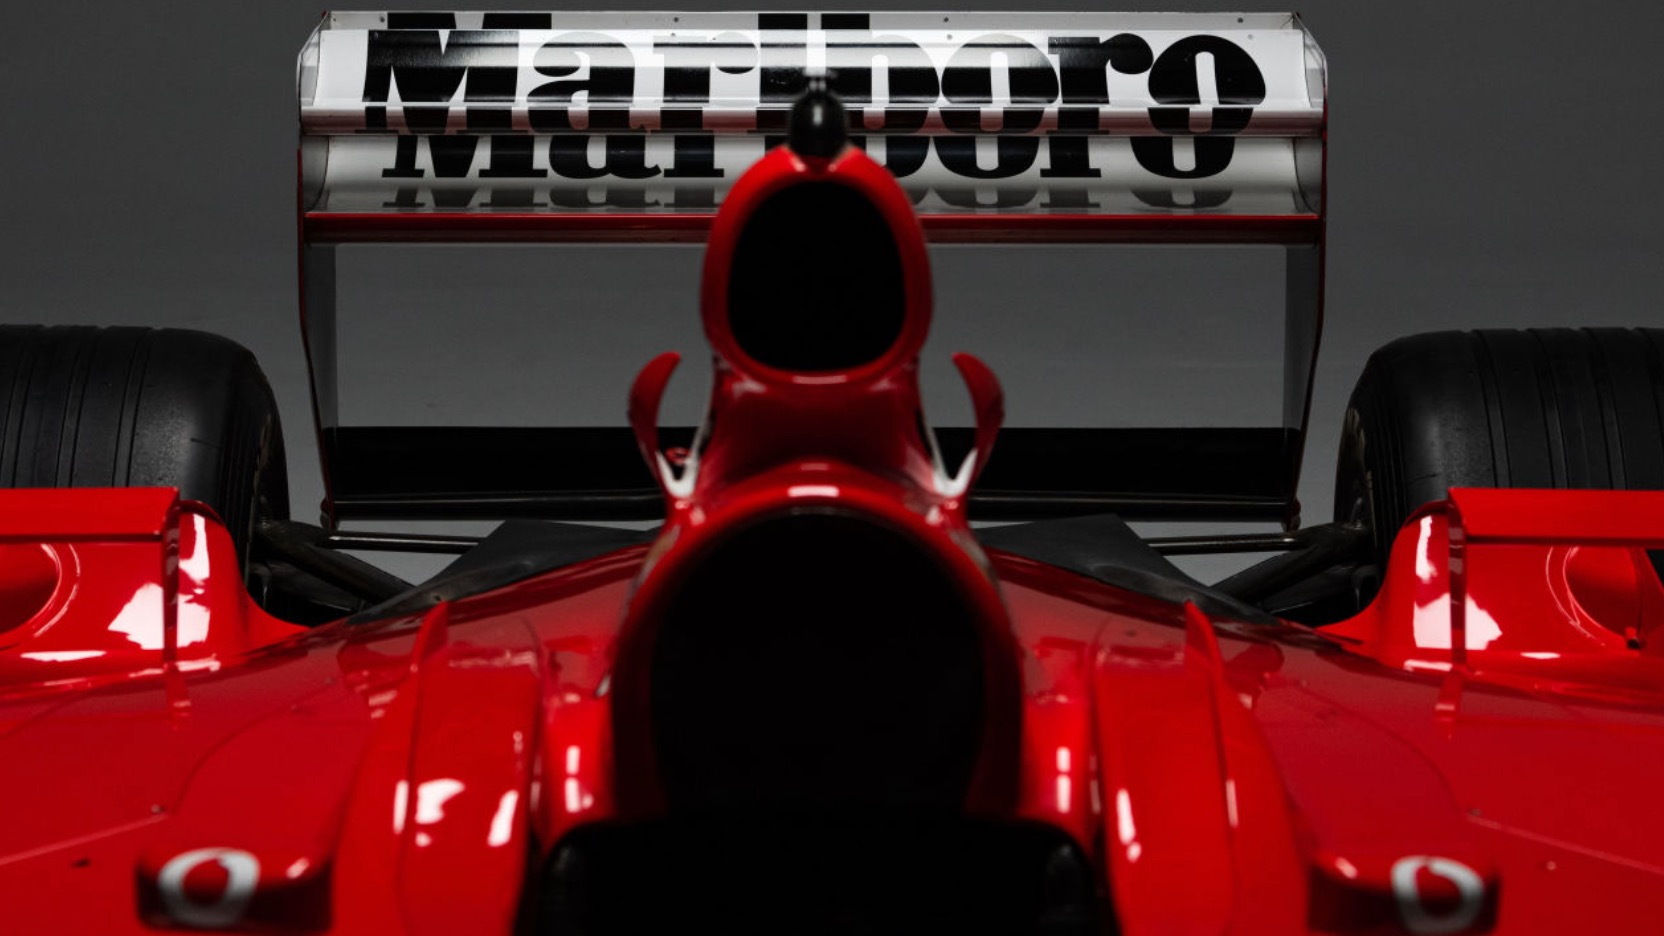 Ferrari F2001b driven by Michael Schumacher (photo via RM Sotheby's)